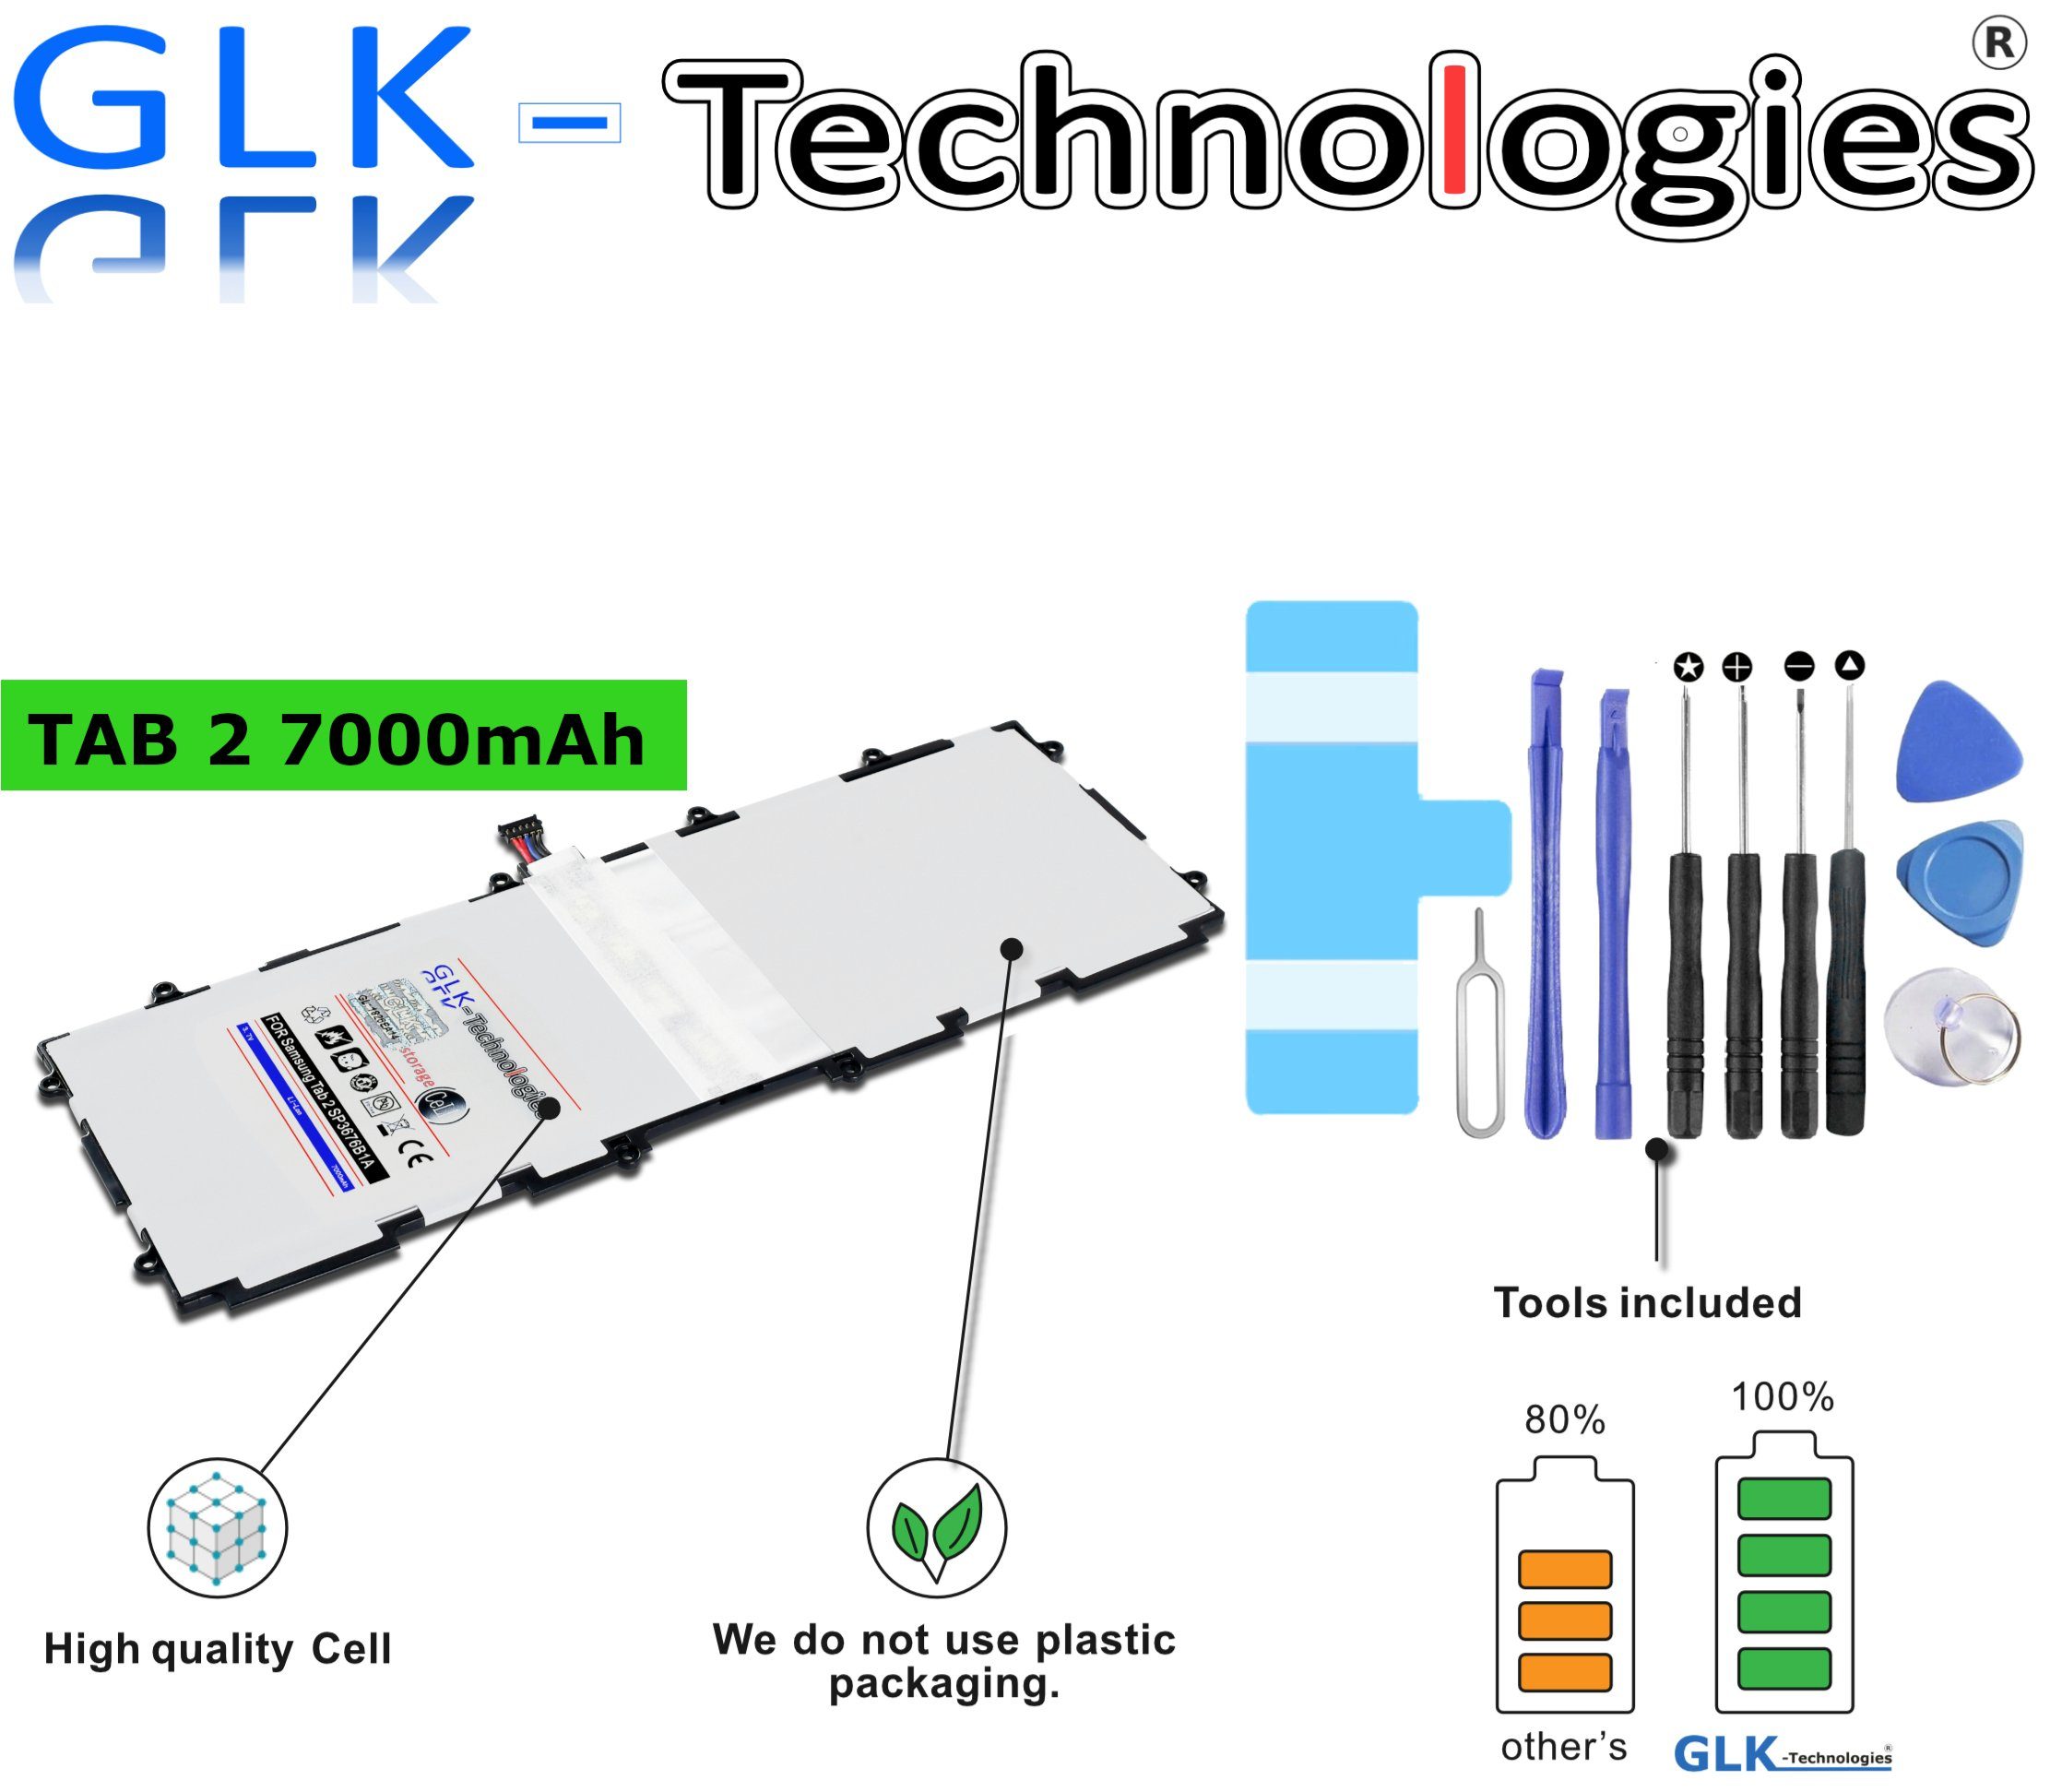 GLK-Technologies Ersatzakku Samsung GT-7511 Galaxy Tab 2 10.1" GT-P5100 GT-P5110 GT-P7500 GT-P7510 GT-N8000 GT-N8010 SCH-i905 SP3676B1A, Original GLK-Technologies Battery, accu, 7000 mAh Akku, + Werkzeug Set Kit Tablet-Akku 7000 mAh (3.8 V)